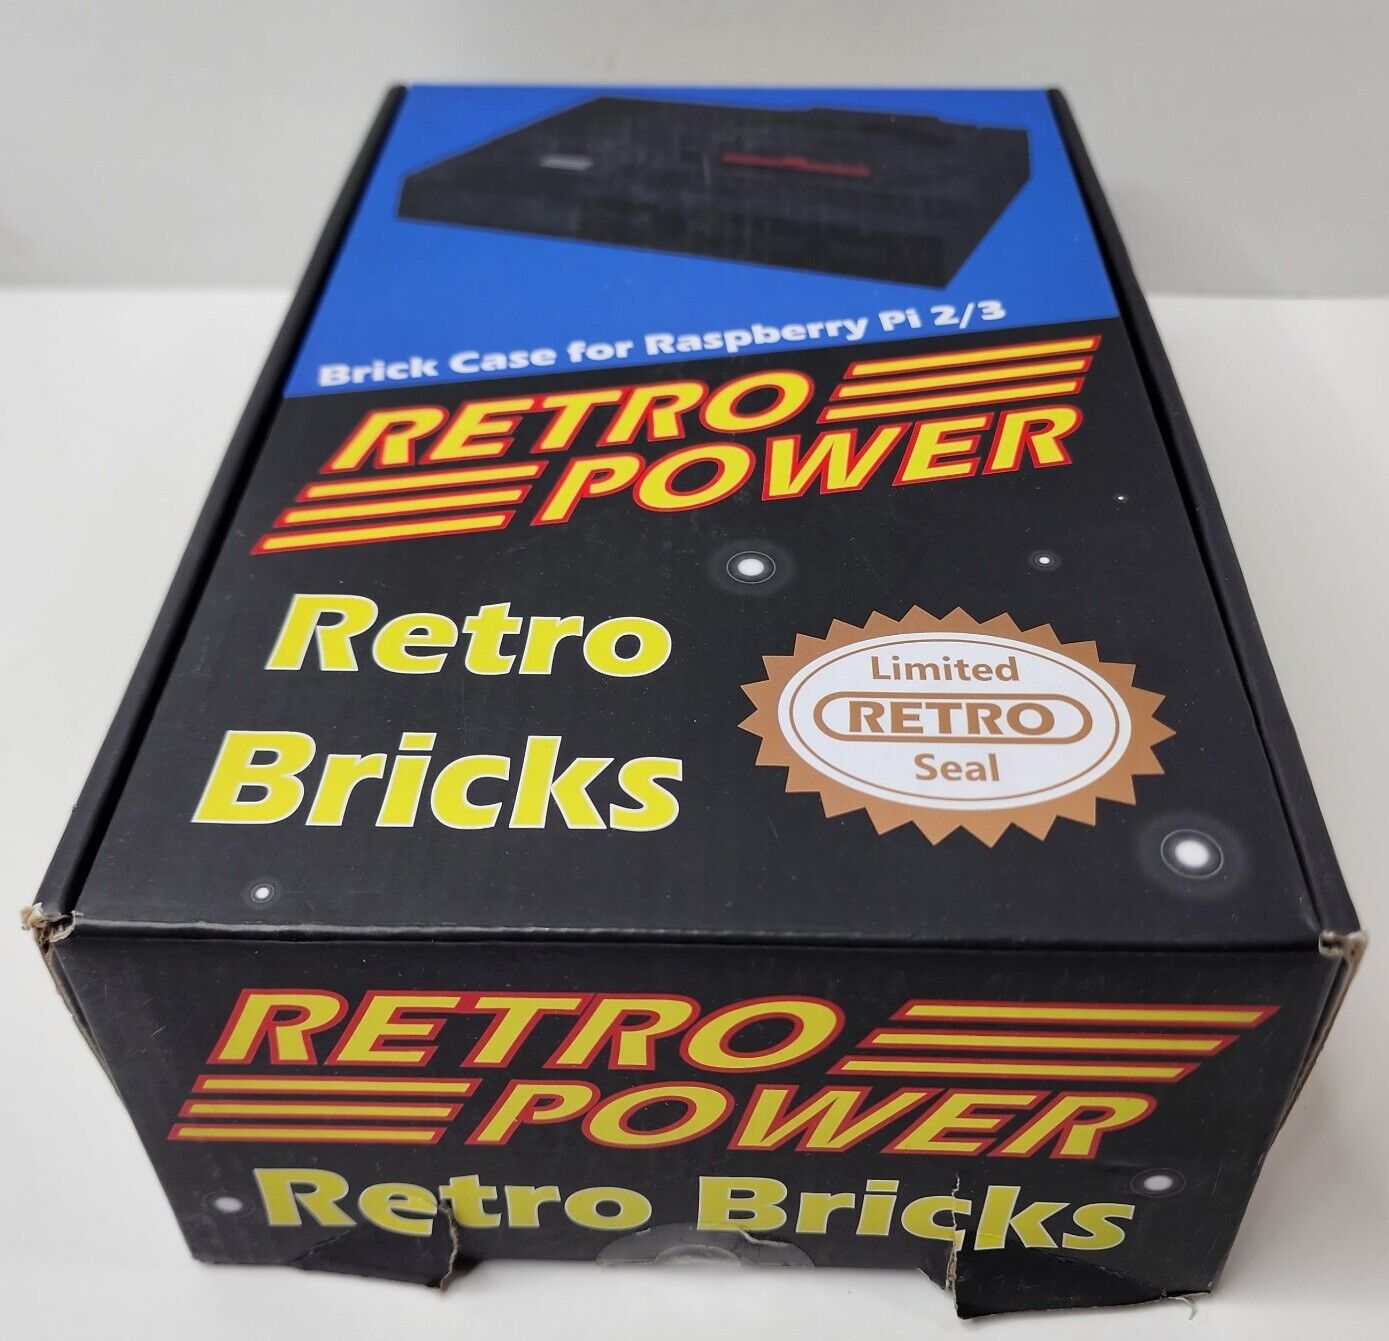 Retro Power - Retro Brick Case [Nintendo NES] for Raspberry Pi 2/3 -New/Open Box